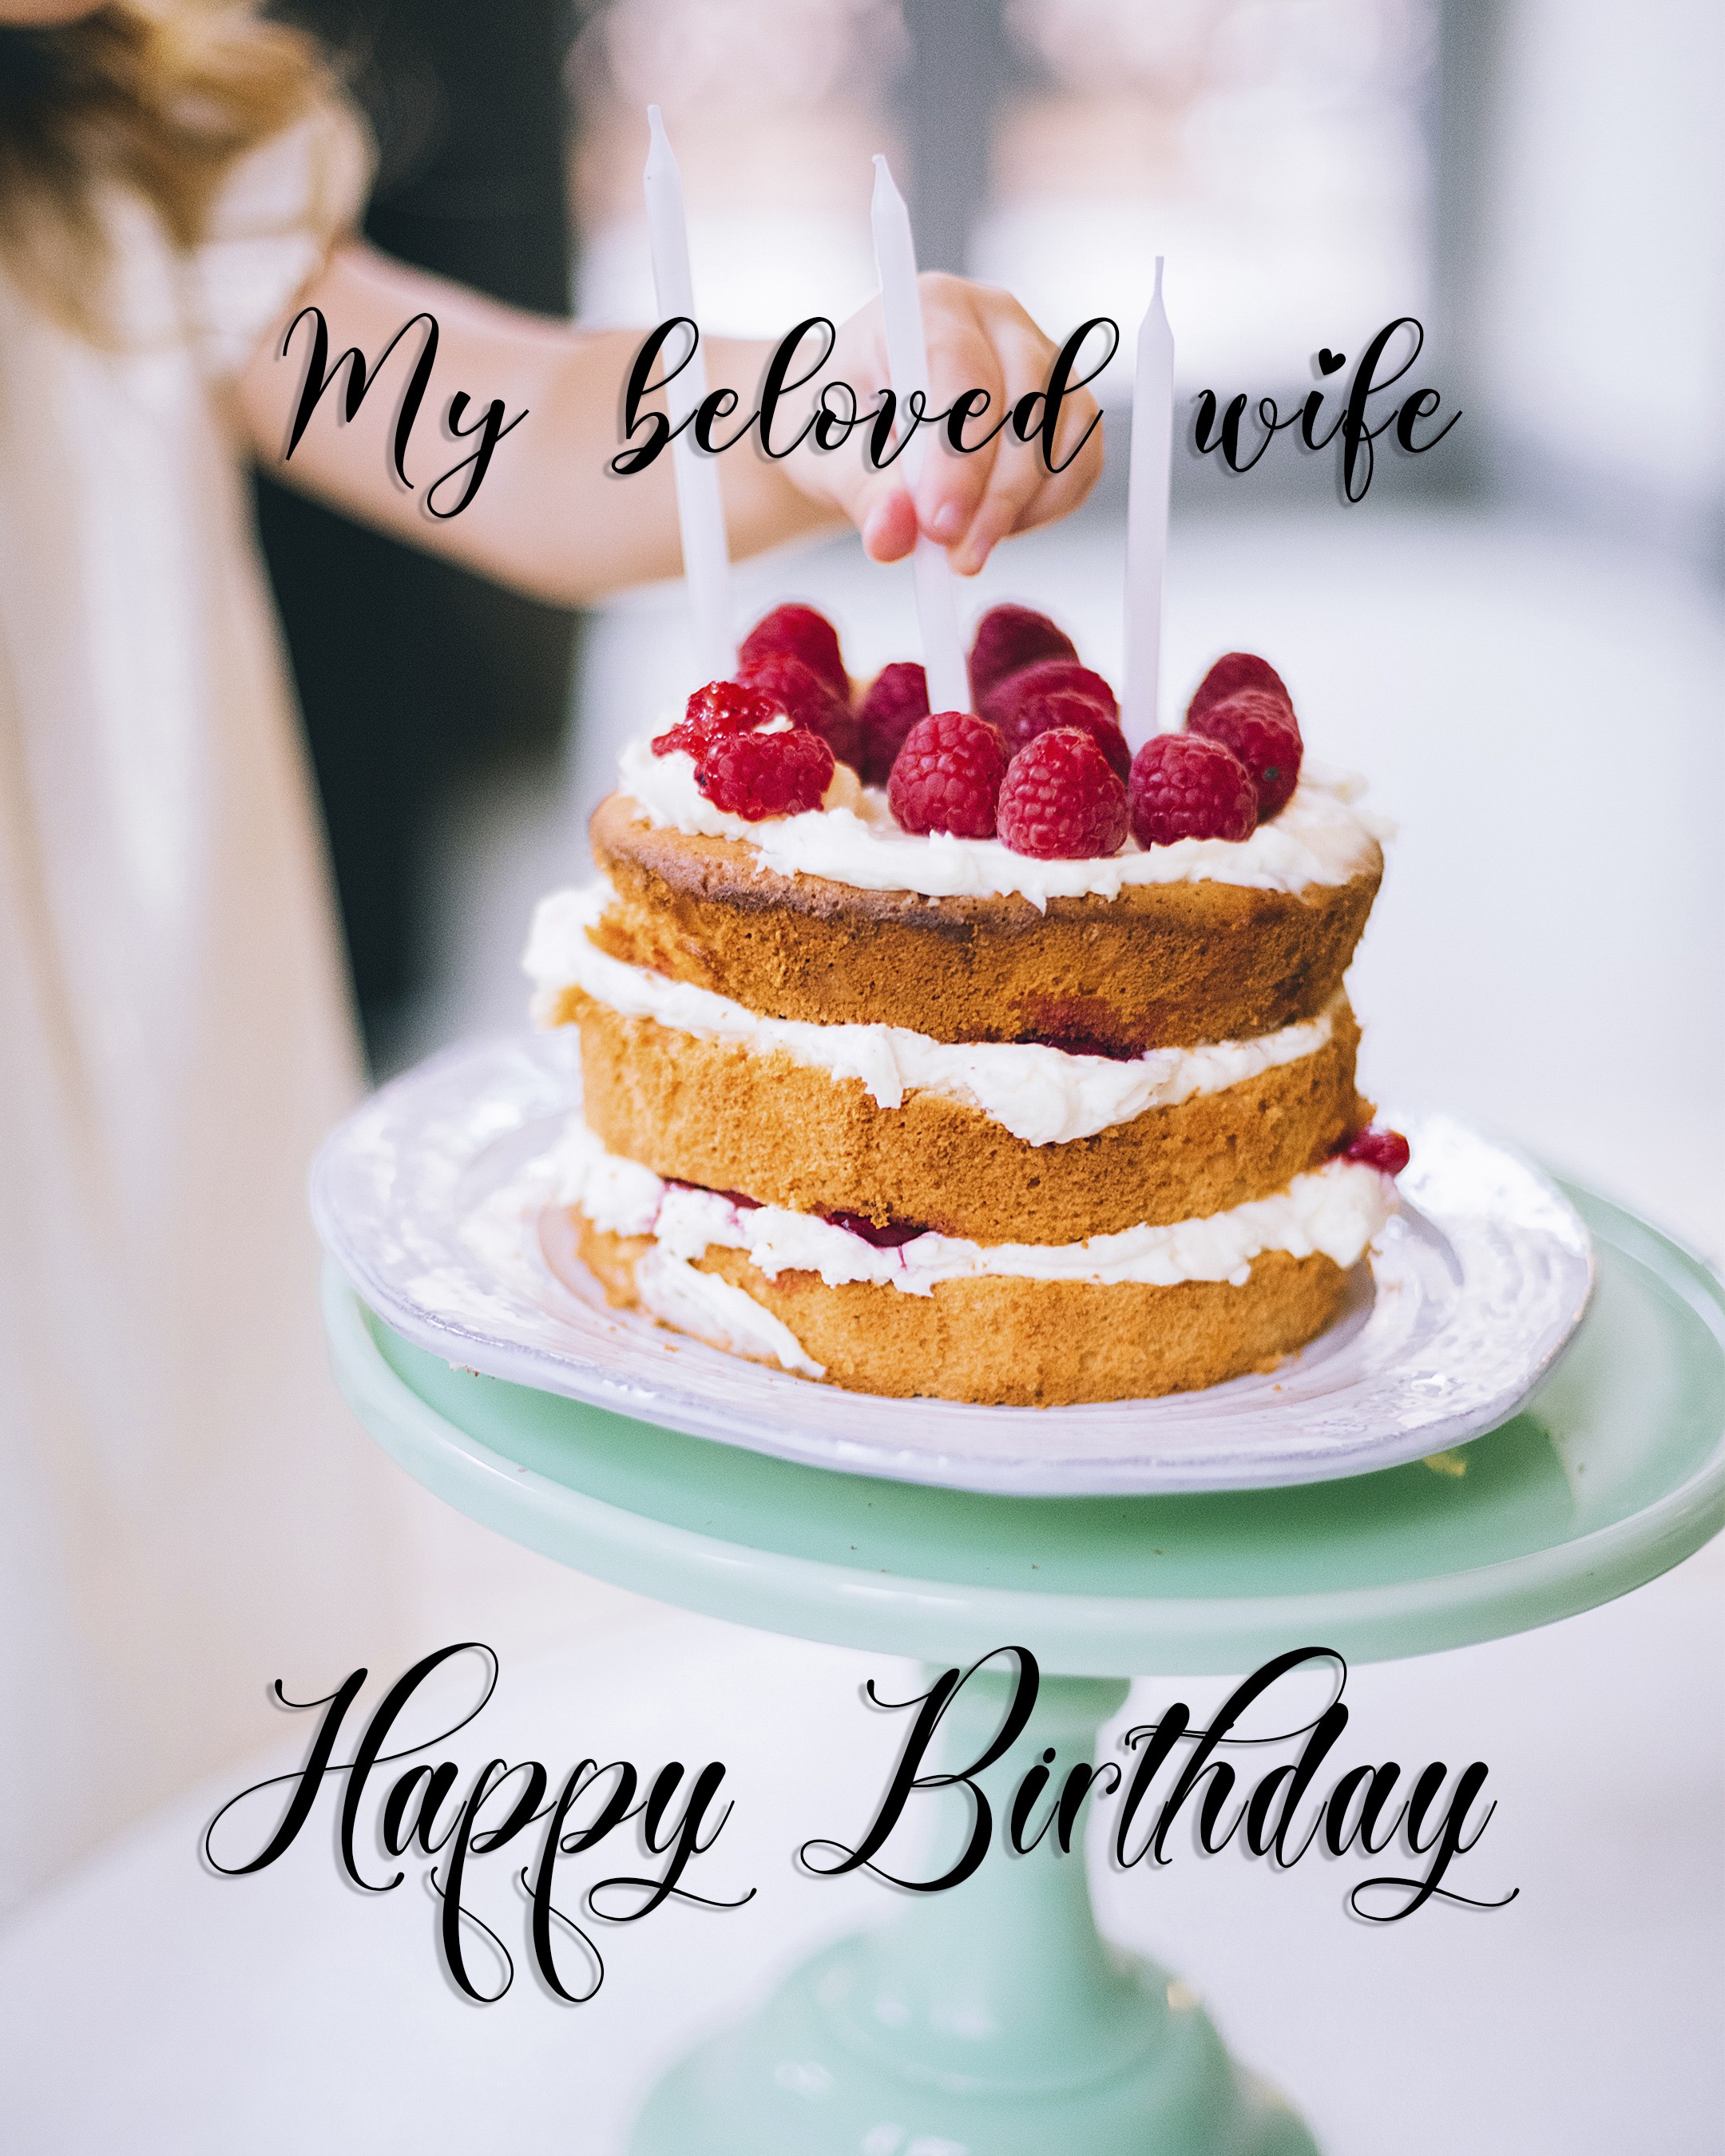 Free Happy Birthday Image For Wife With Cake - birthdayimg.com